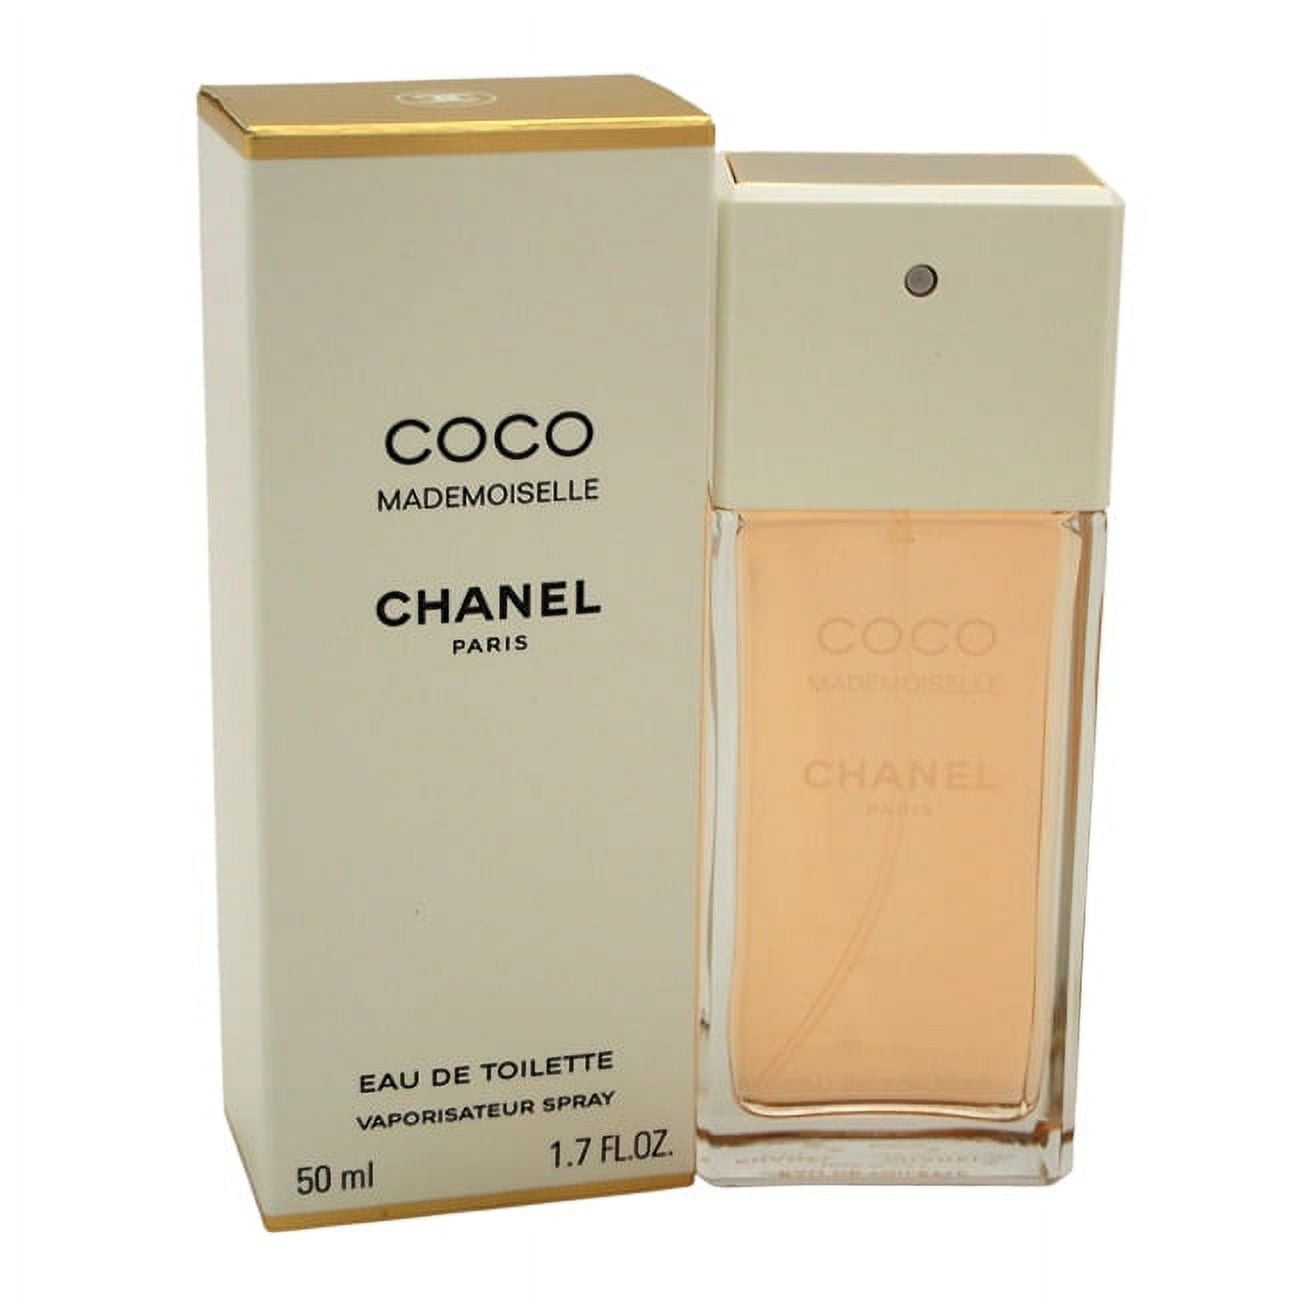 perfume for women chanel